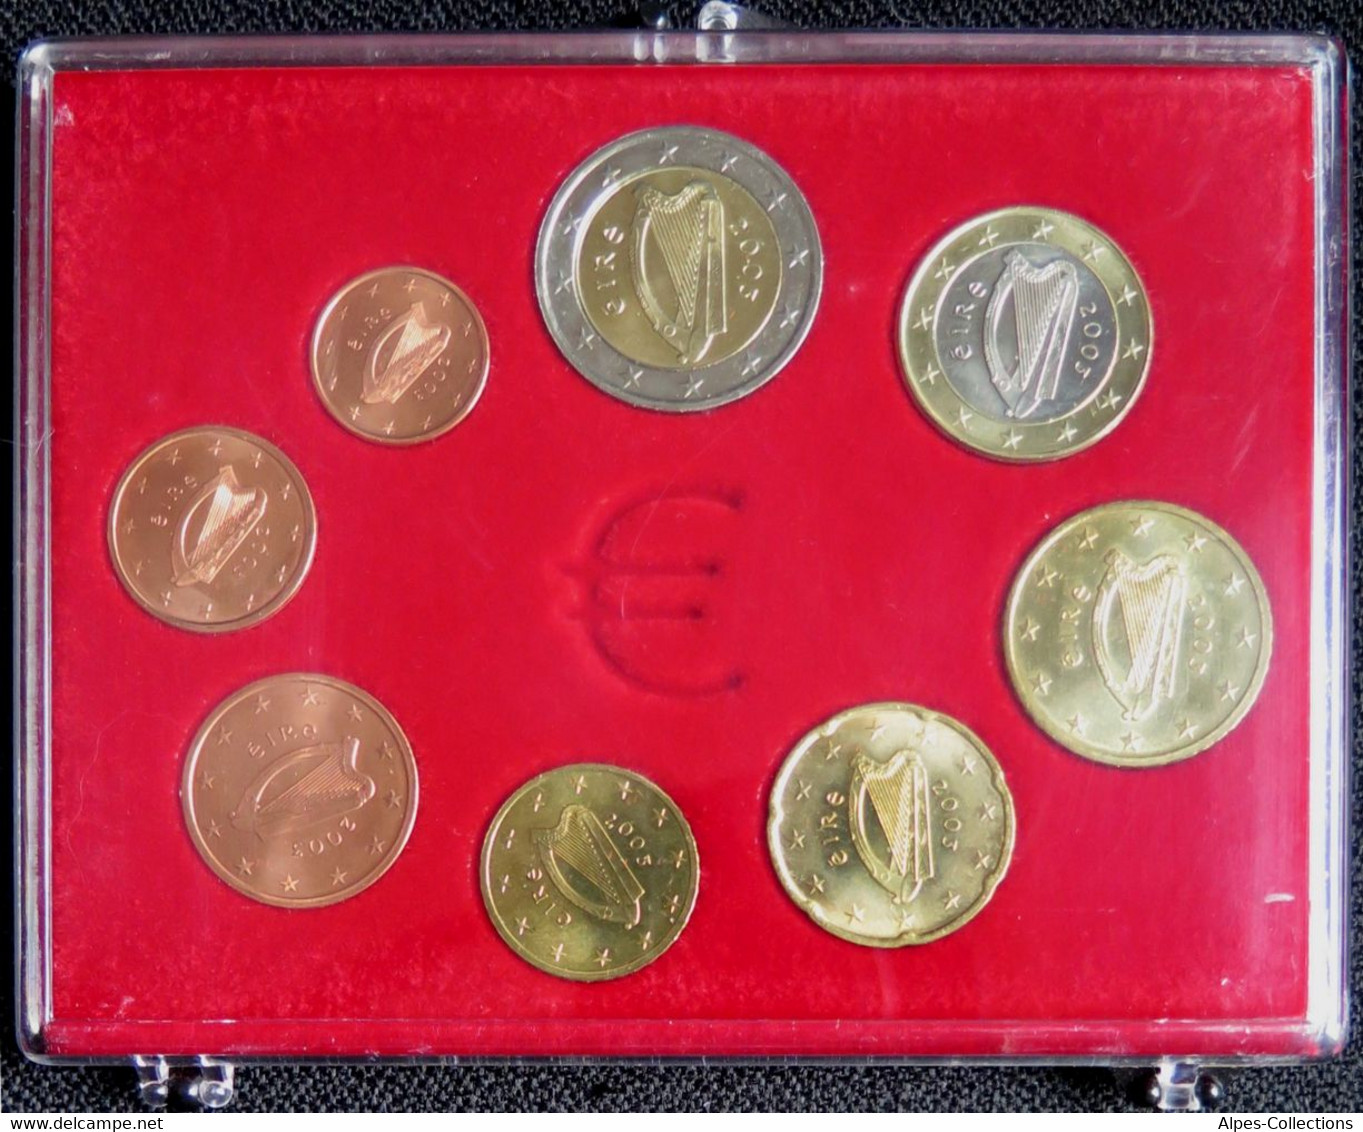 IRX2003.3 - SERIE EUROS IRLANDE - 2003 - 1 Cent à 2 Euros - Irlanda